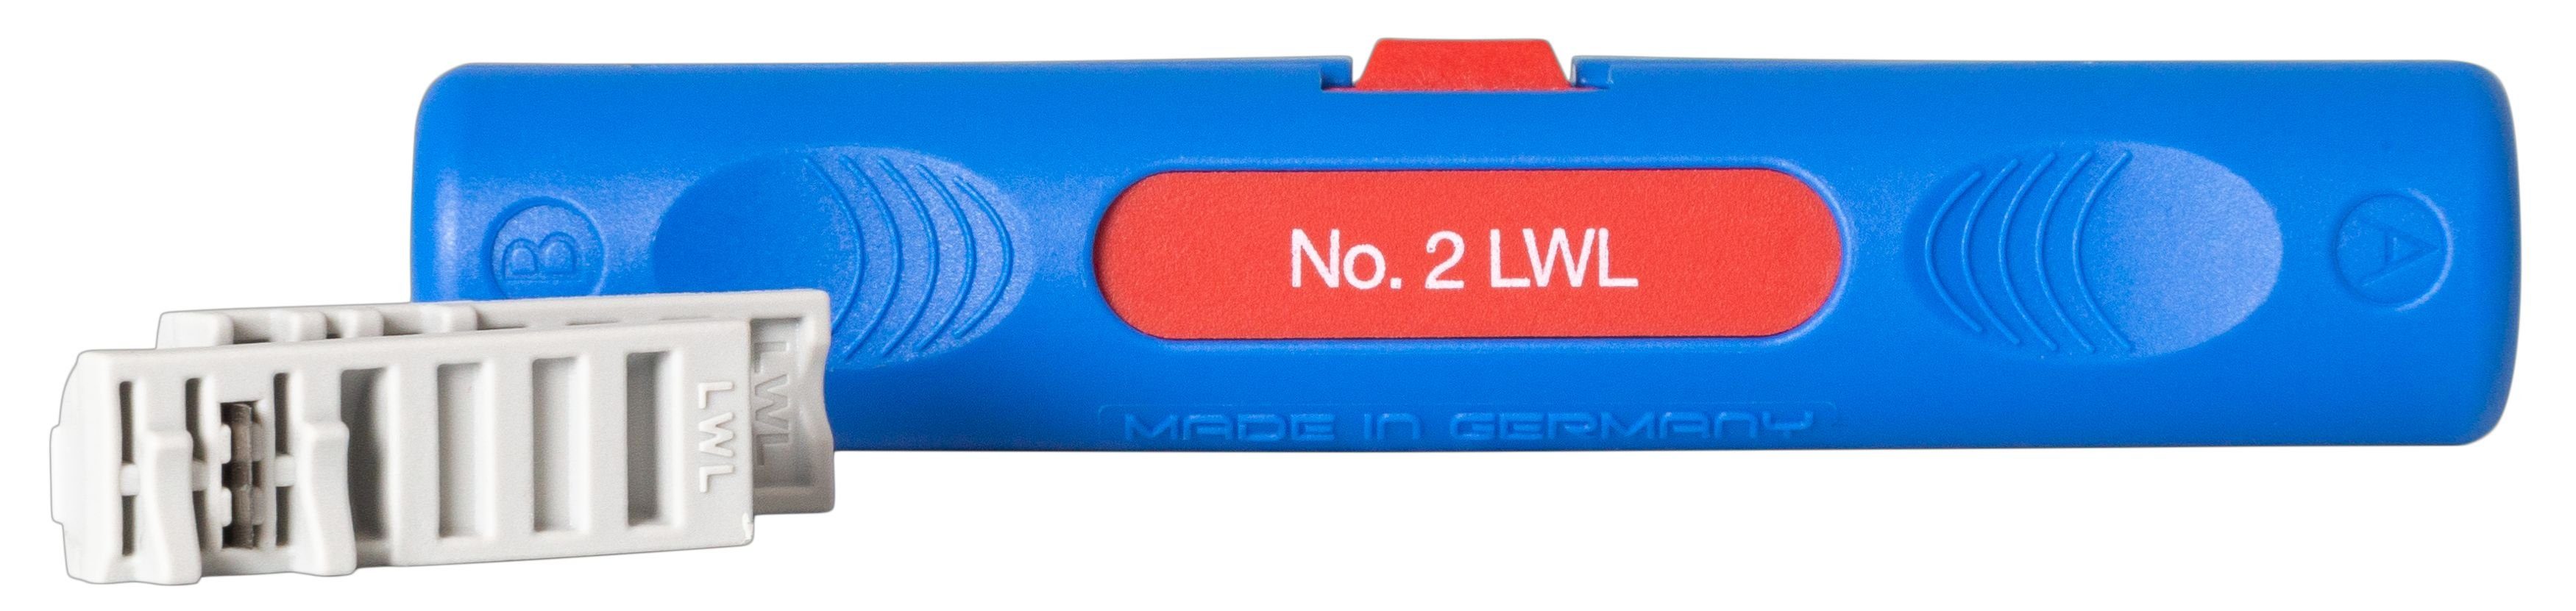 WEICON Abmantelungszange LWL Fibre Tube No. 2, Entmanteln von speziellen Buffer Tubes, Packung 1-tlg.